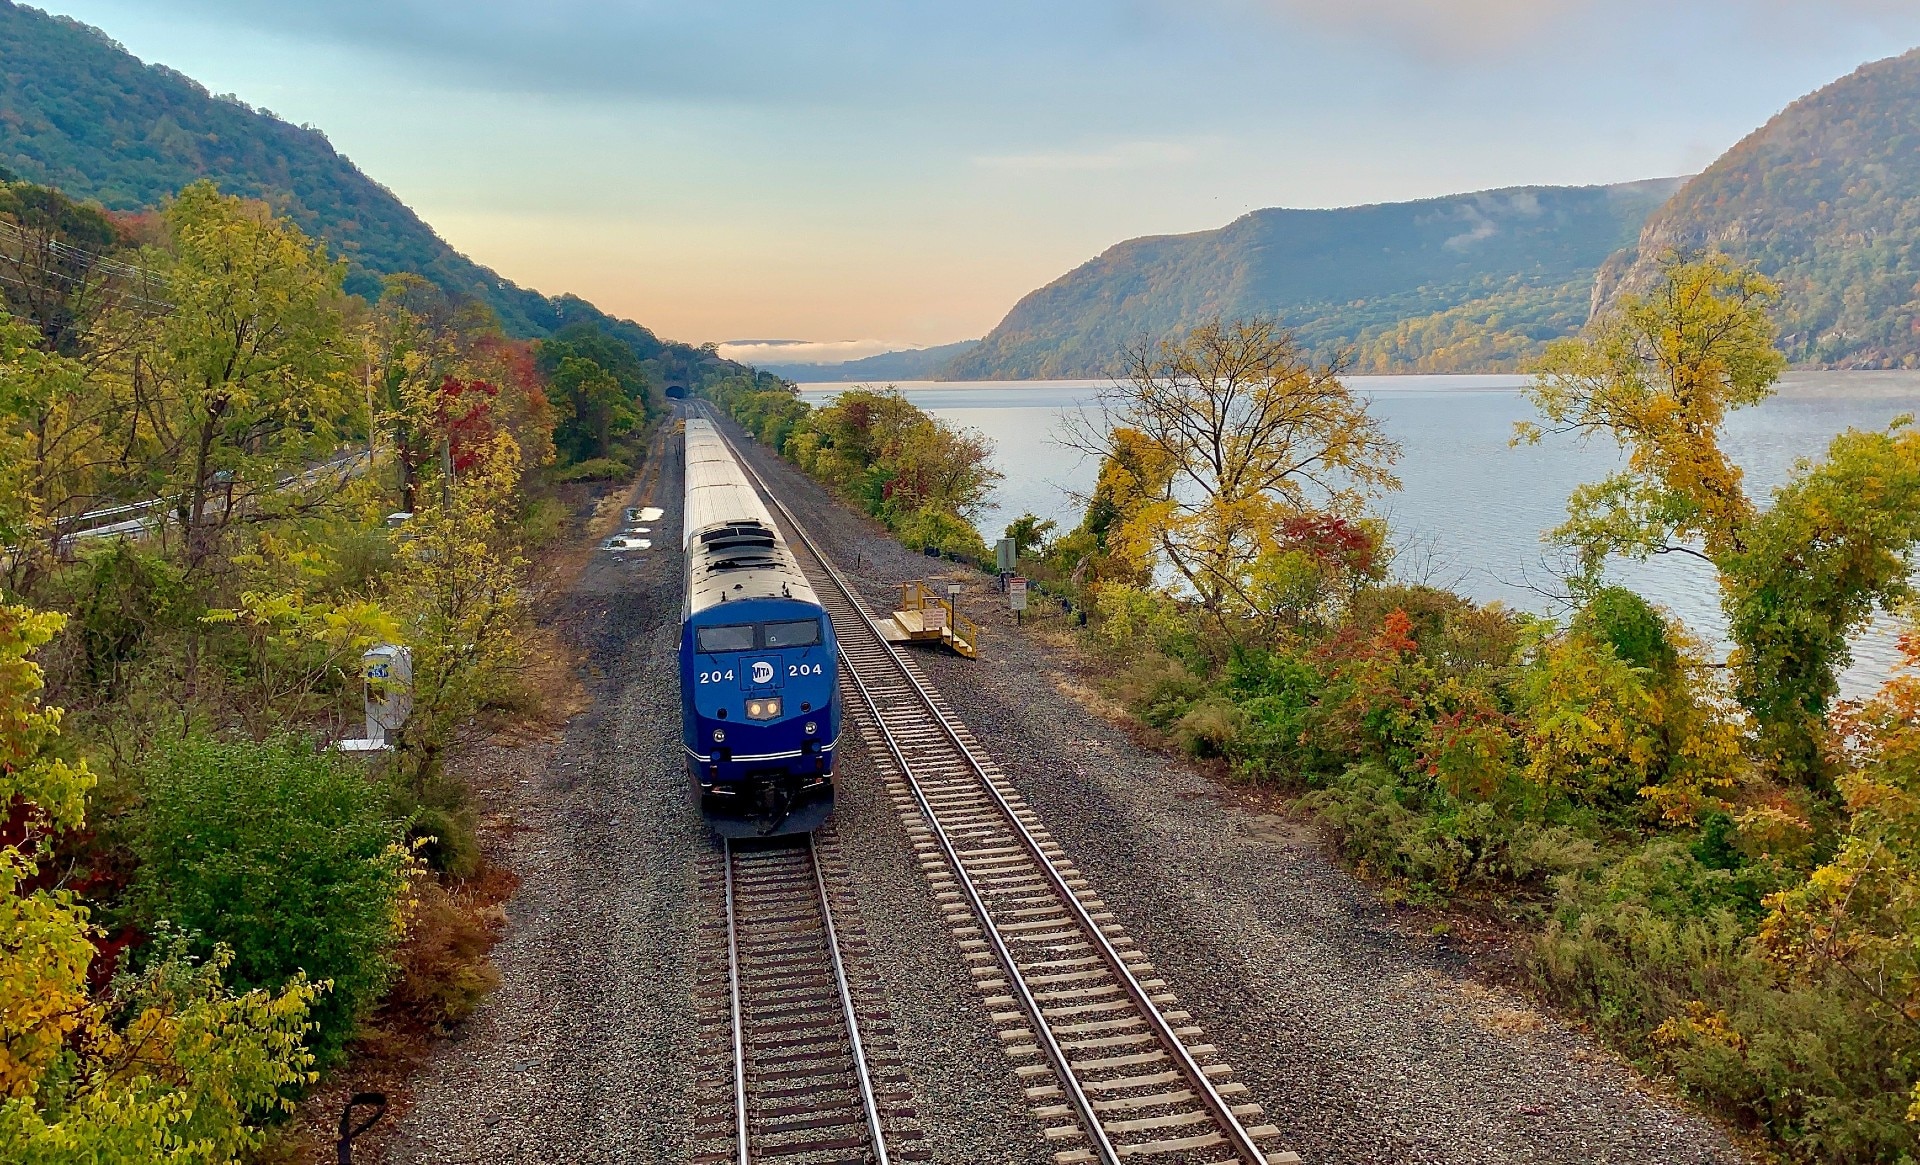 Metro-North Railroad Announces Return of Full Service on the Hudson Line